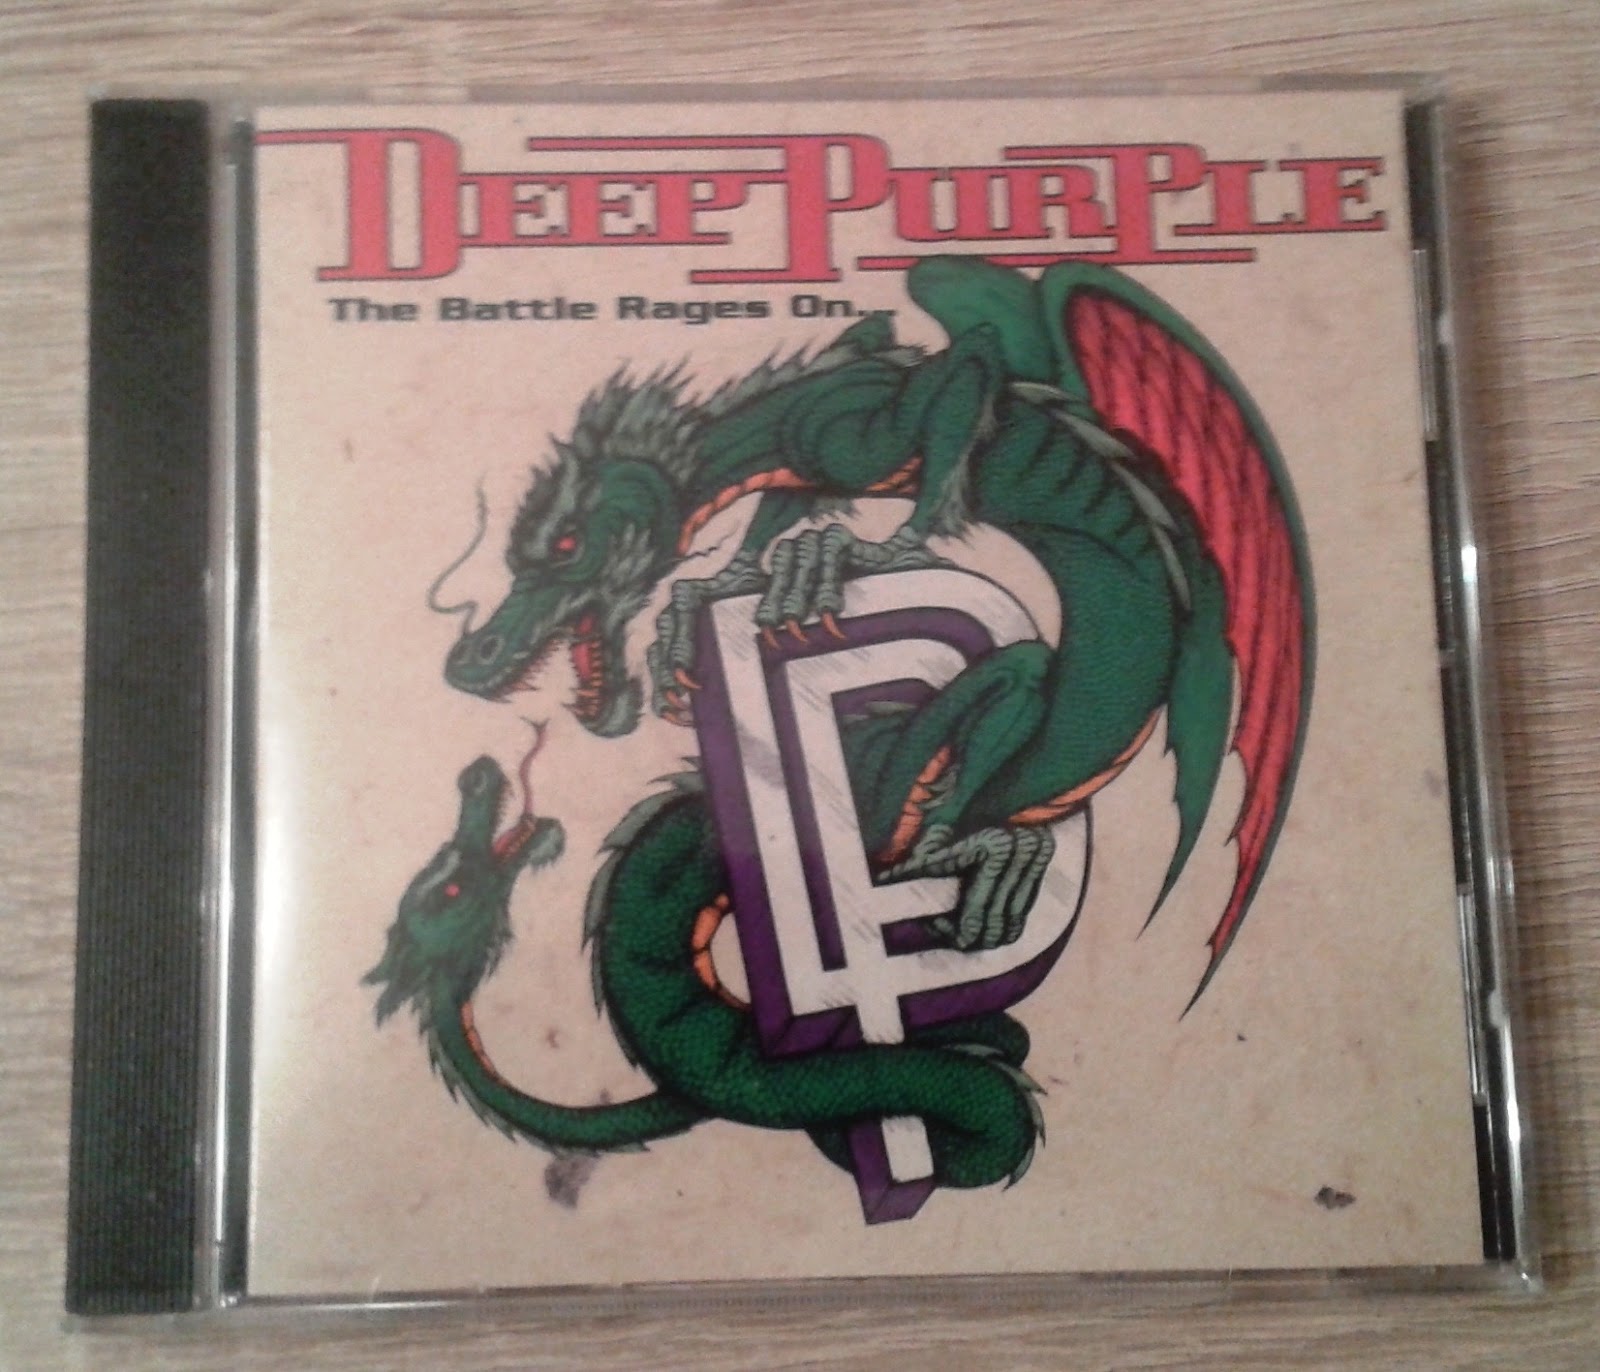 DEEP PURPLE, BATTLE RAGES ON (1993)